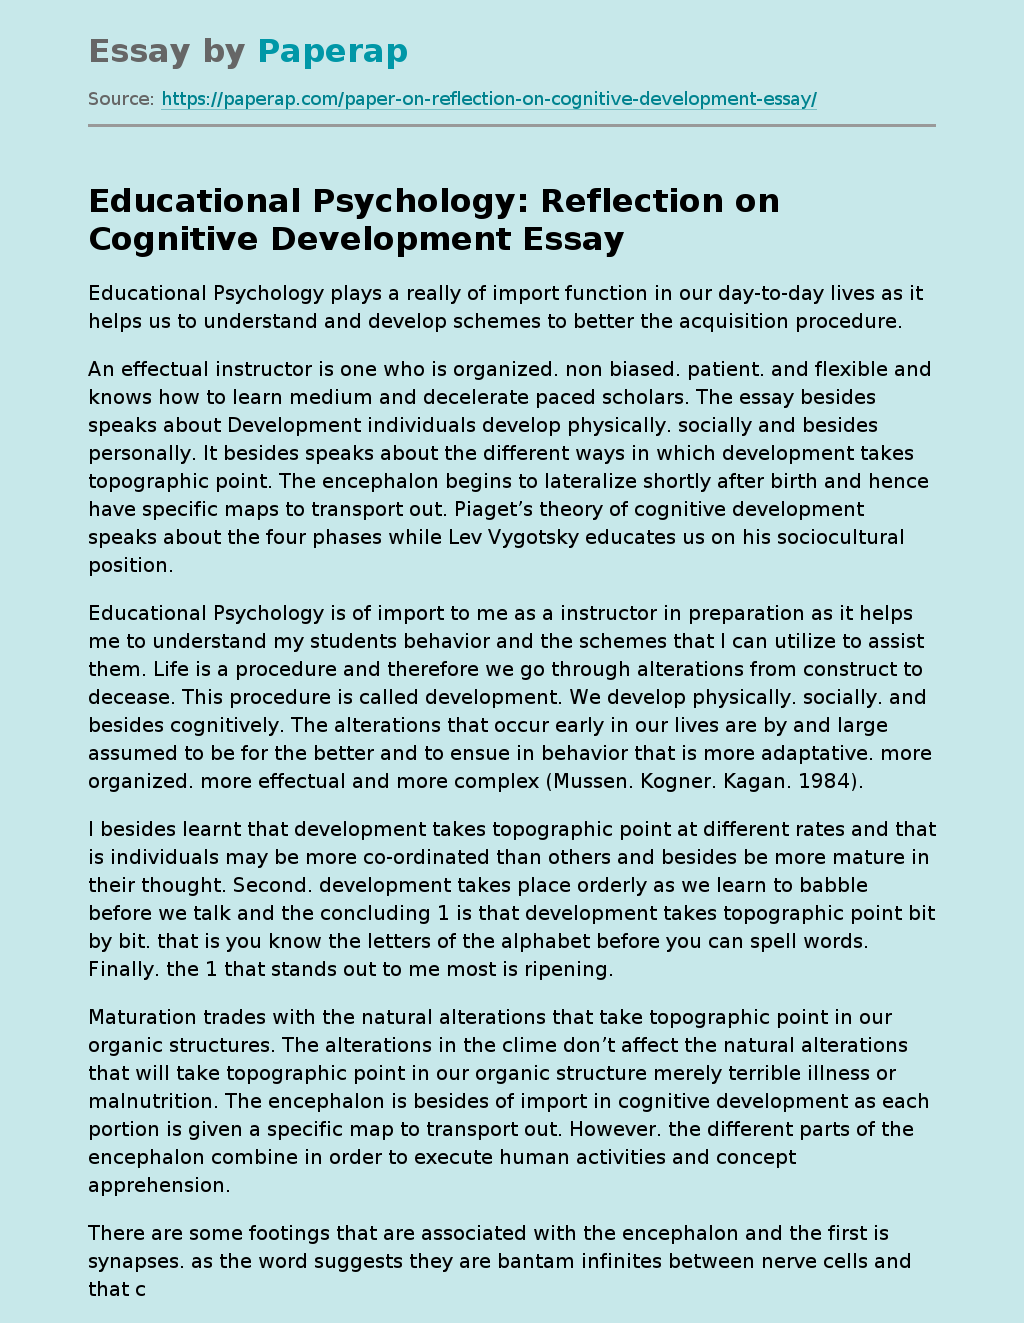 Educational Psychology: Reflection on Cognitive Development